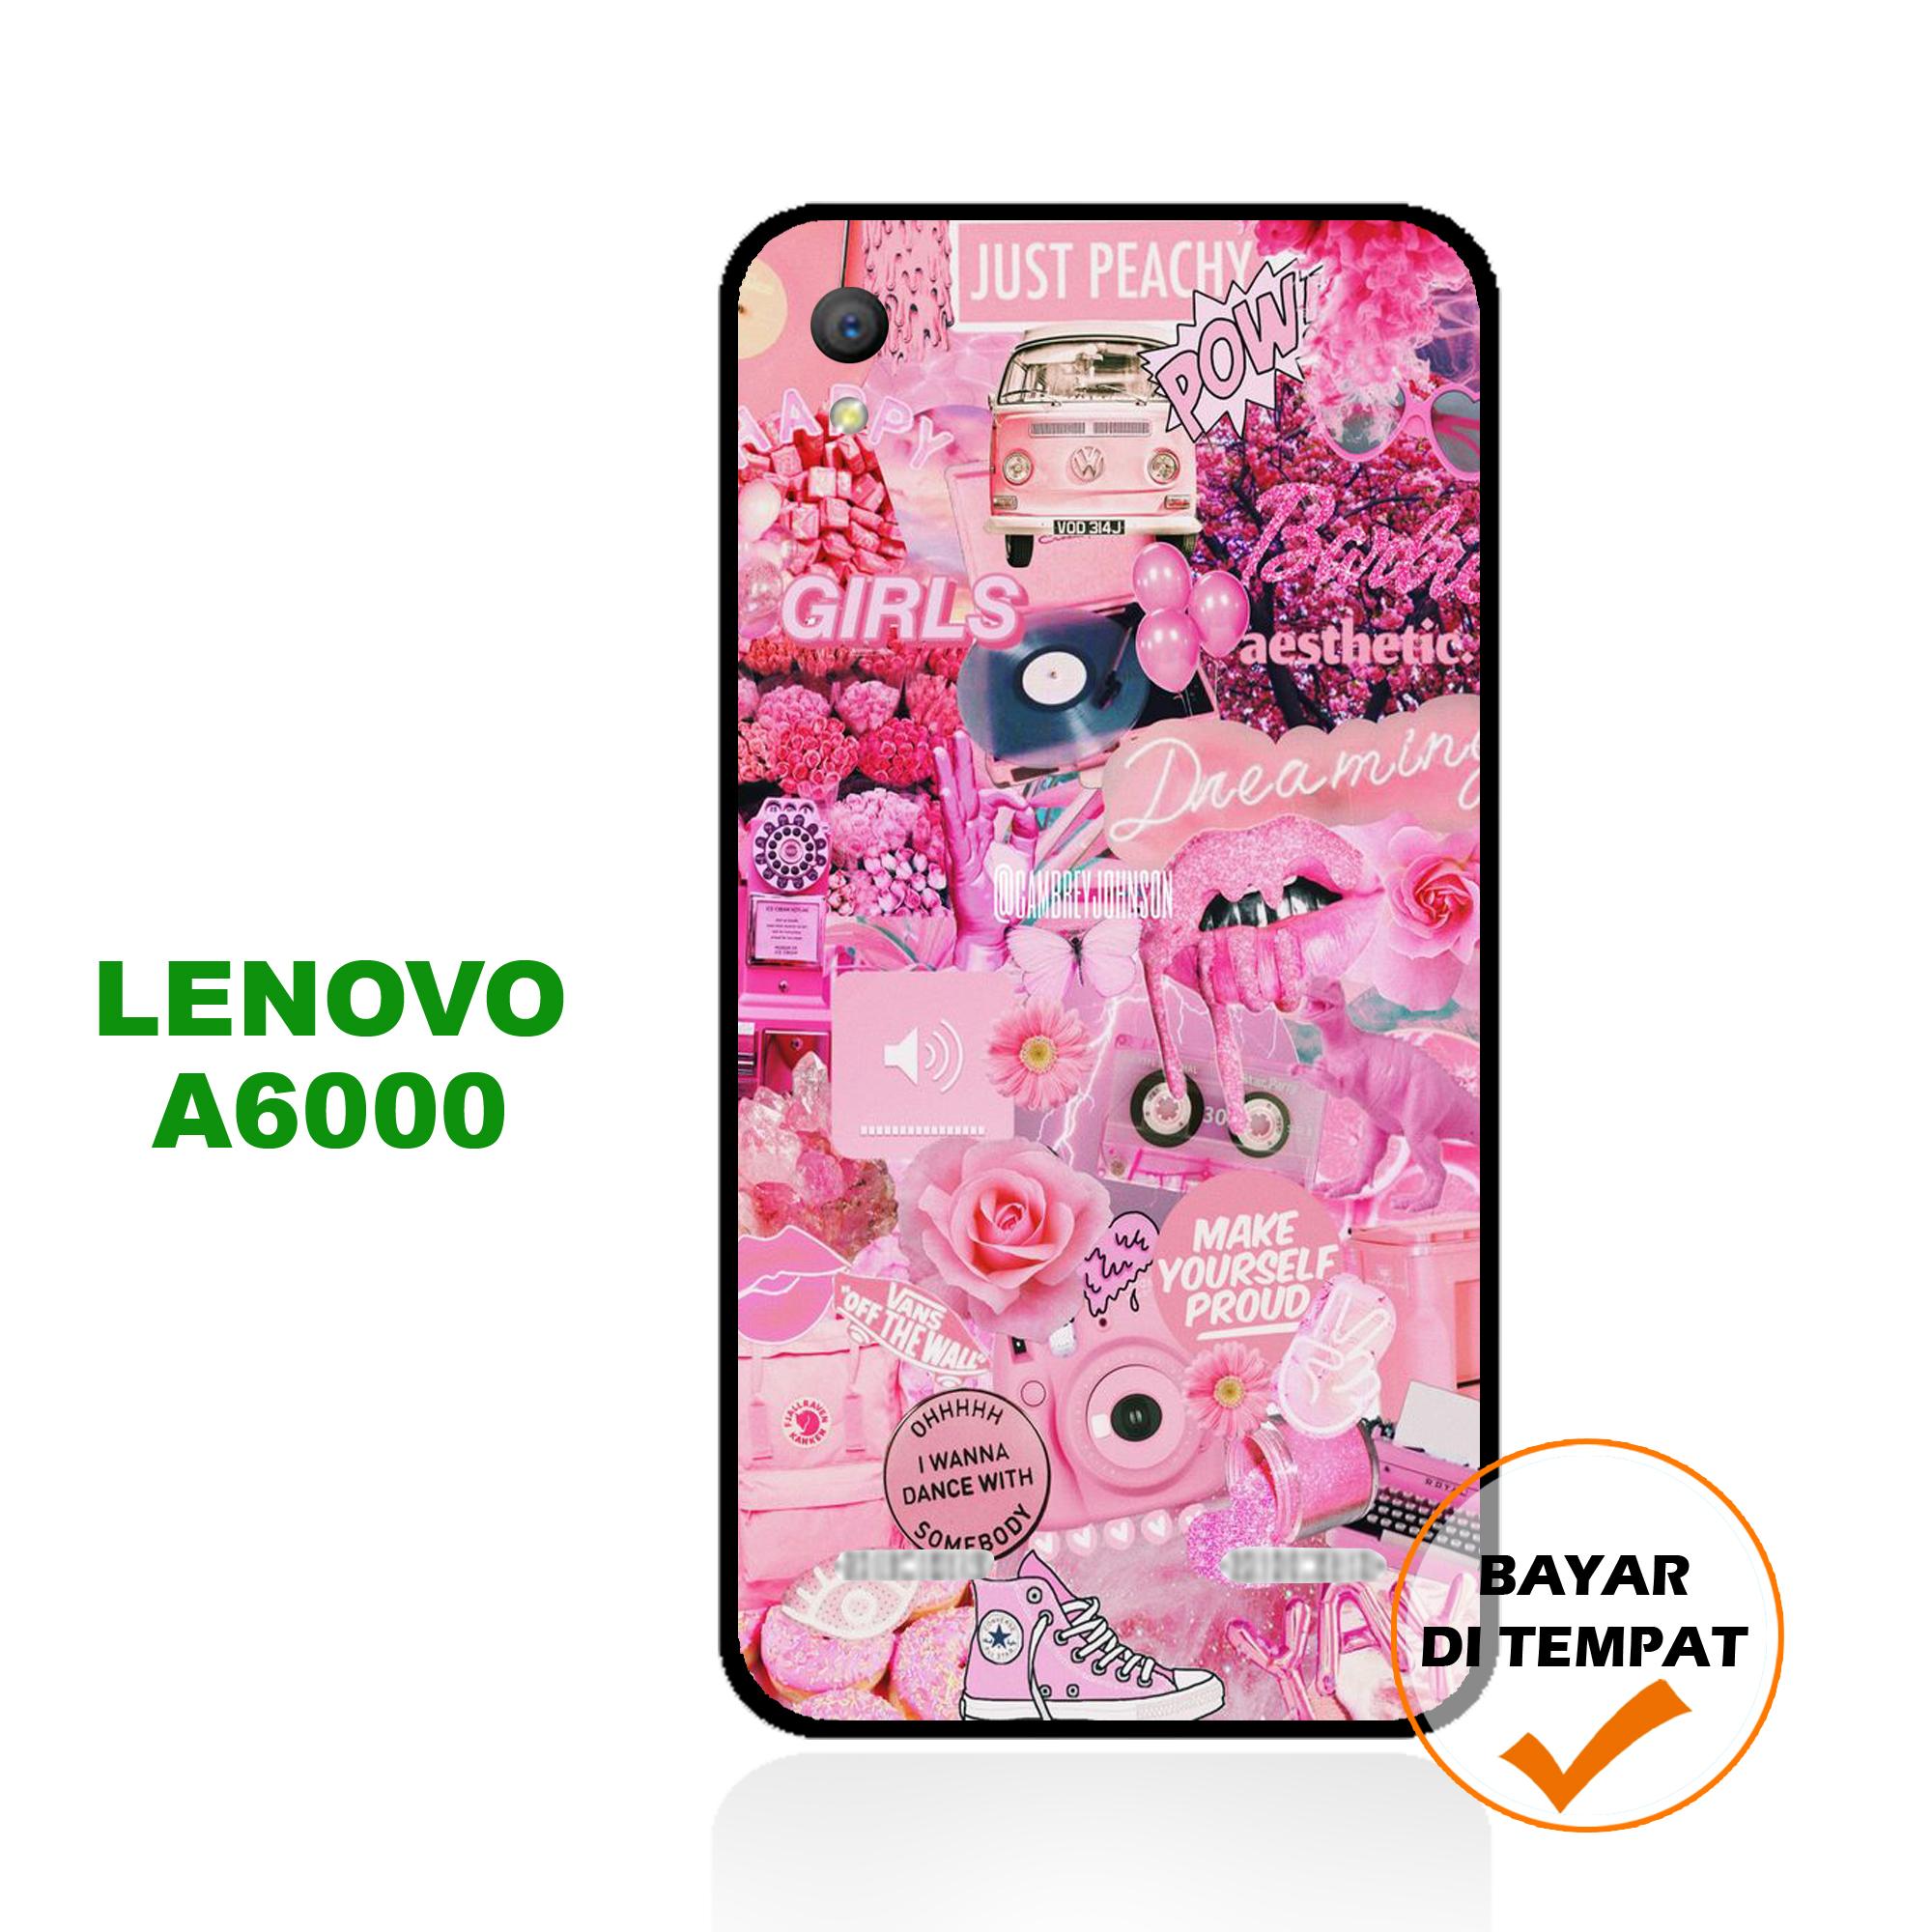 Case Lenovo A6000 02 79 Lazada Indonesia